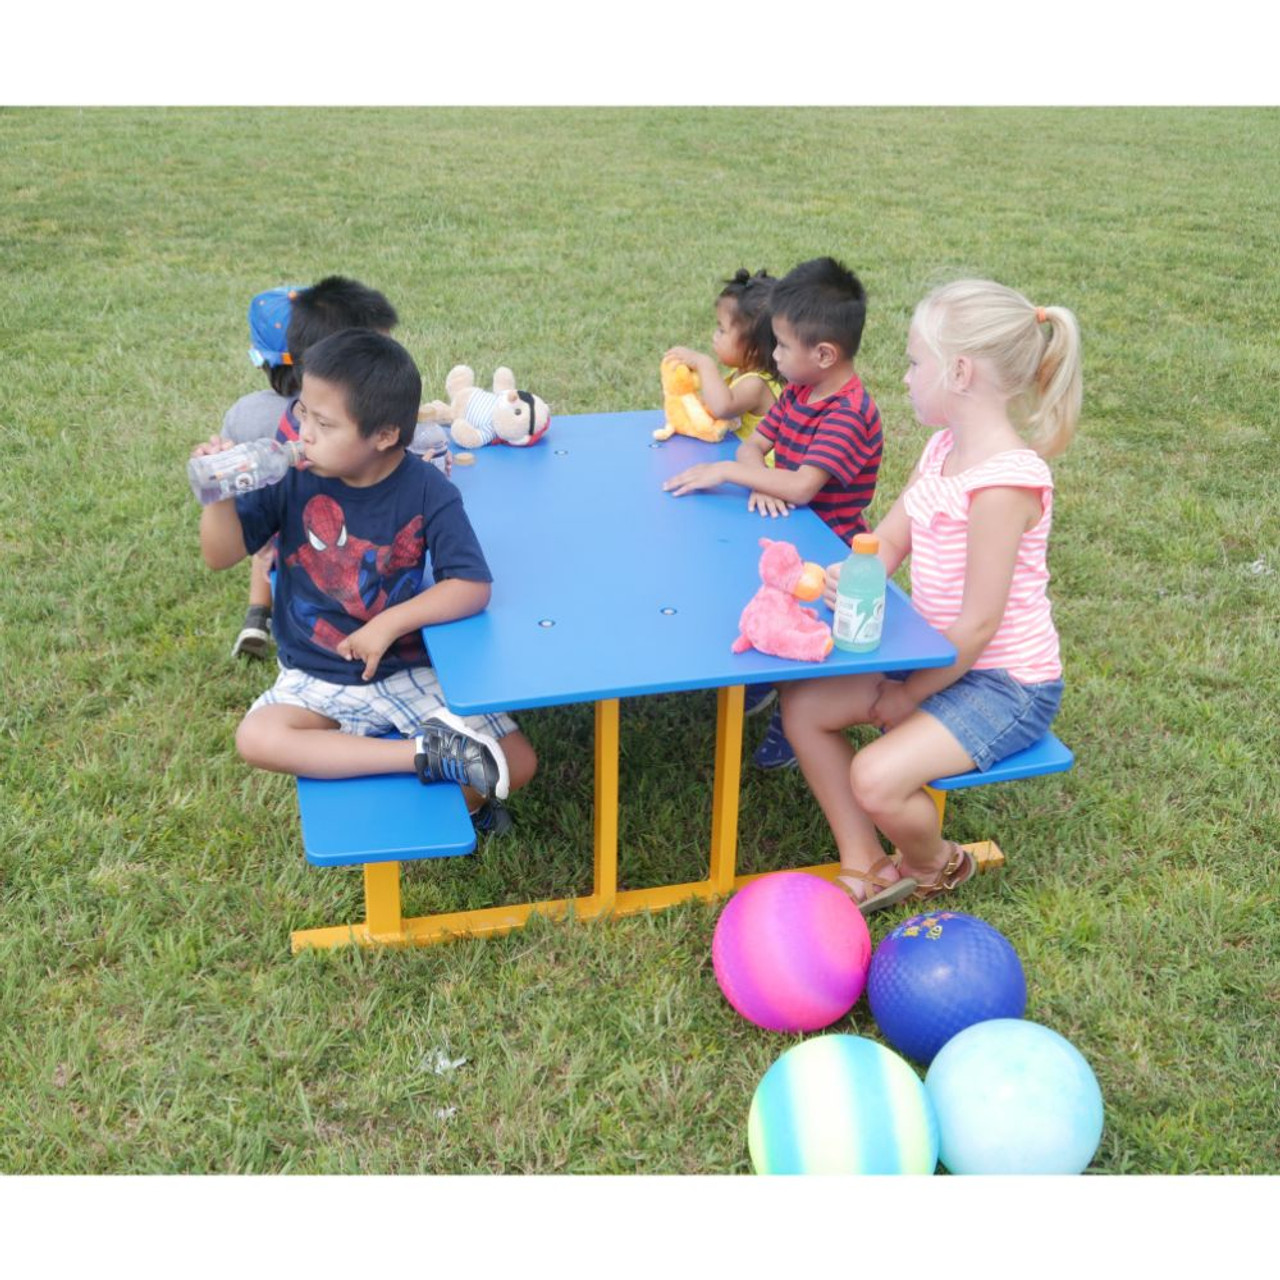 Preschool Picnic Table - in use